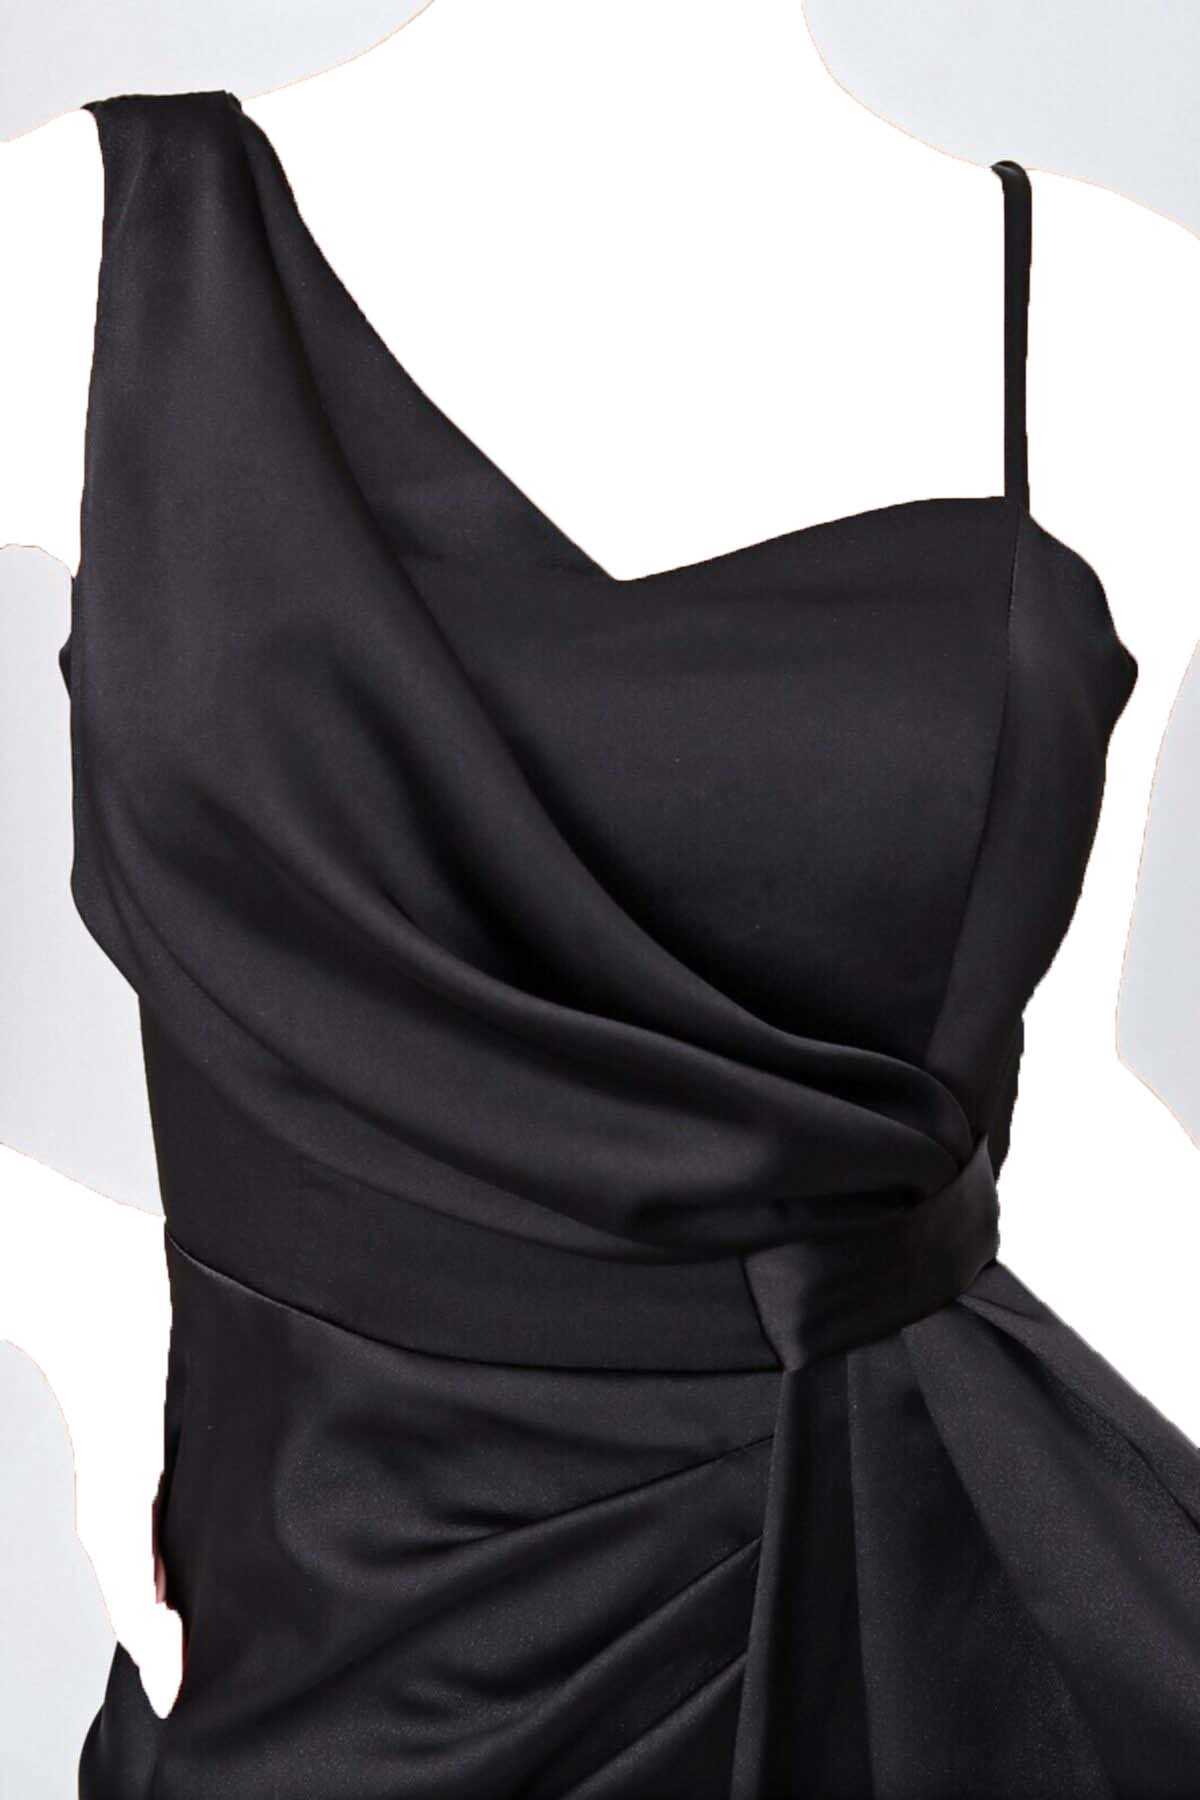 لباس مجلسی زنانه کوتاه برند ZEROPOINT رنگ مشکی کد ty102757651